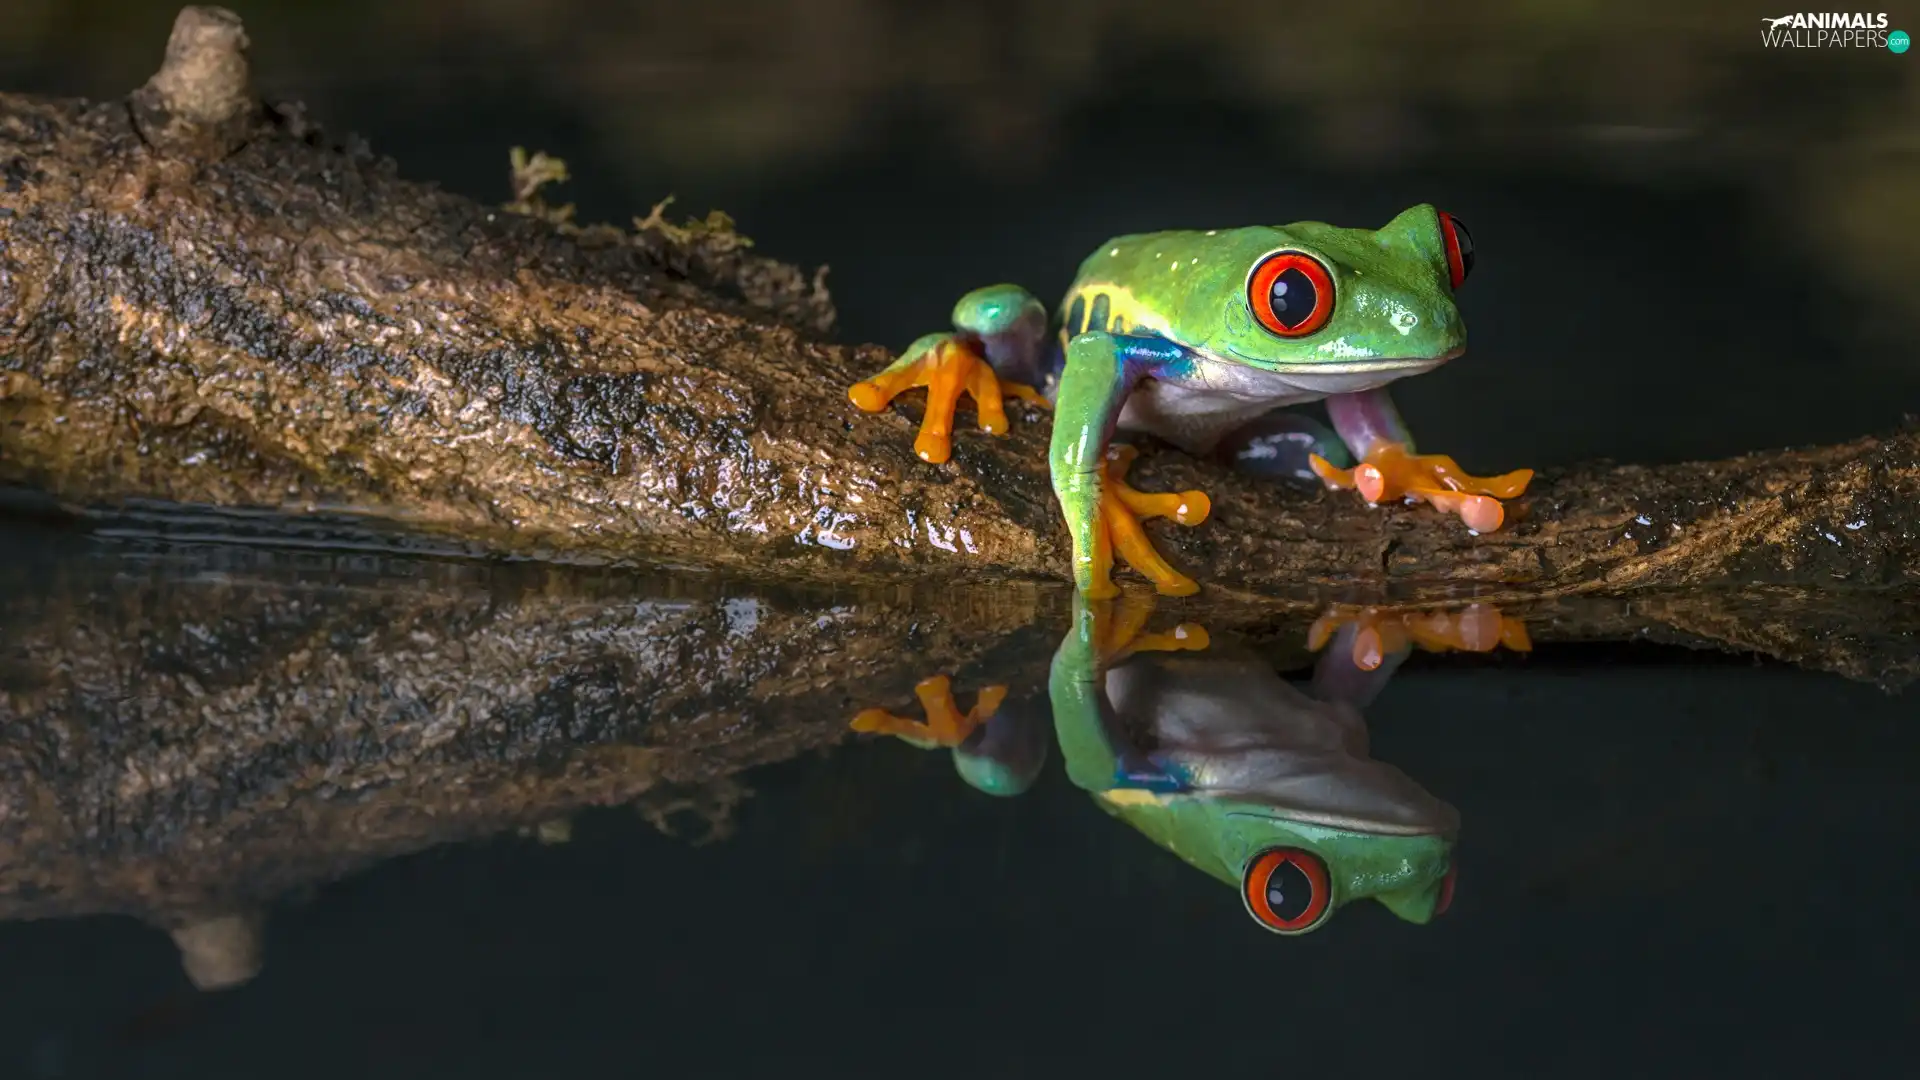 strange frog, water, reflection, Red eyed tree frog